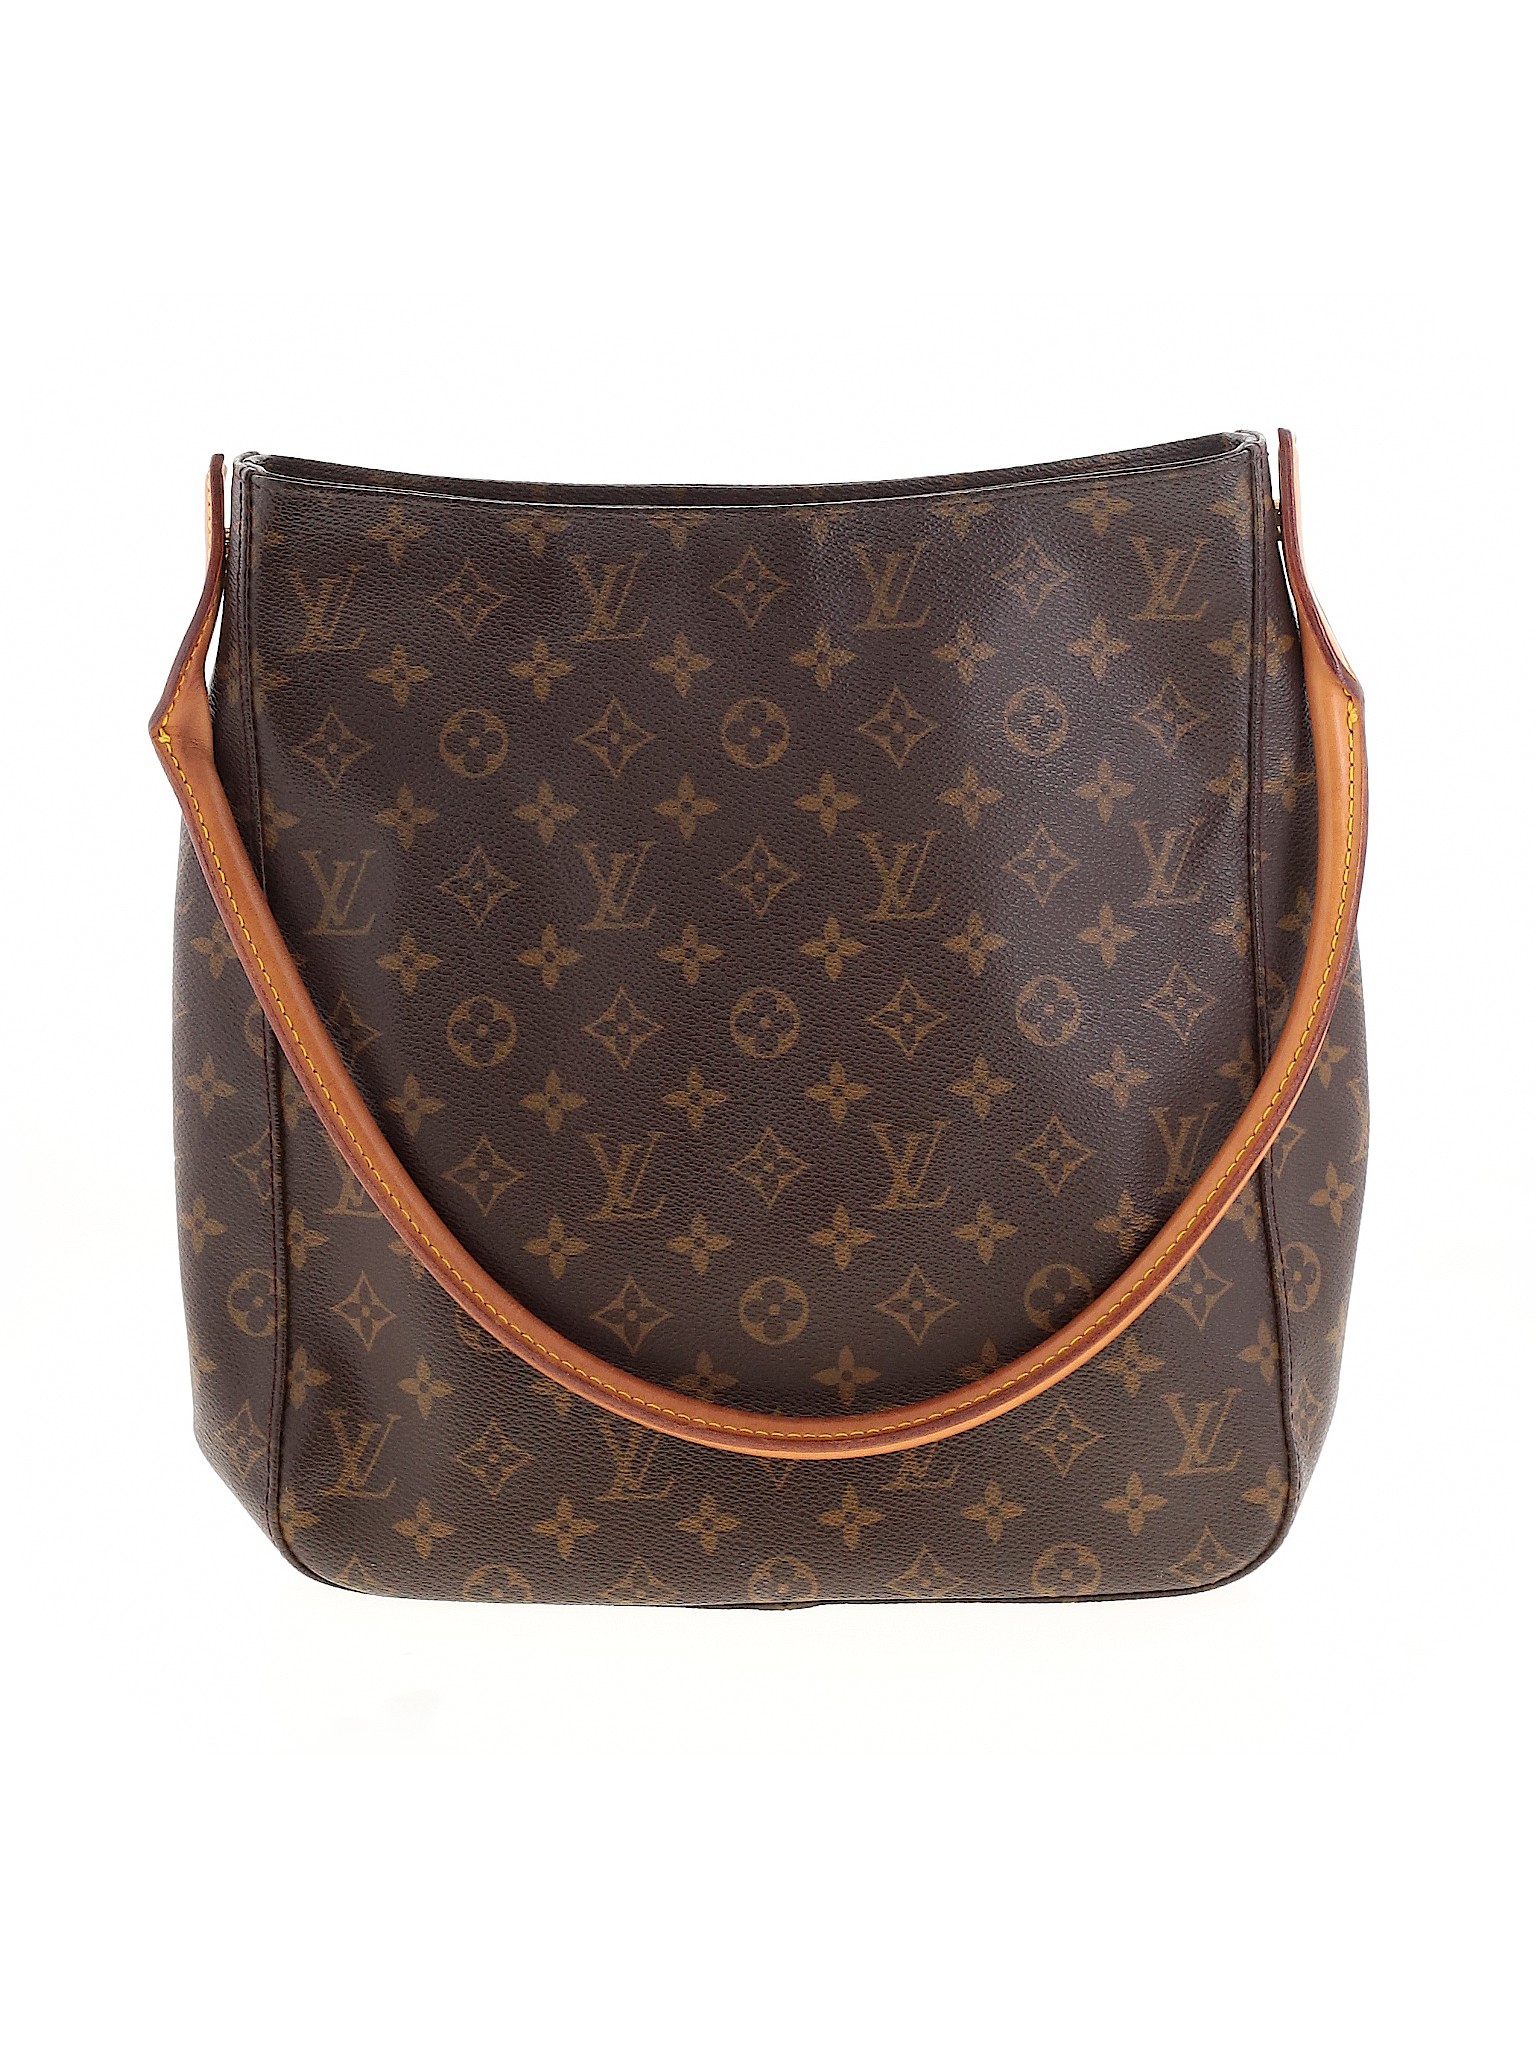 Louis Vuitton 100% Canvas Floral Brown Shoulder Bag One Size - 42% off | thredUP